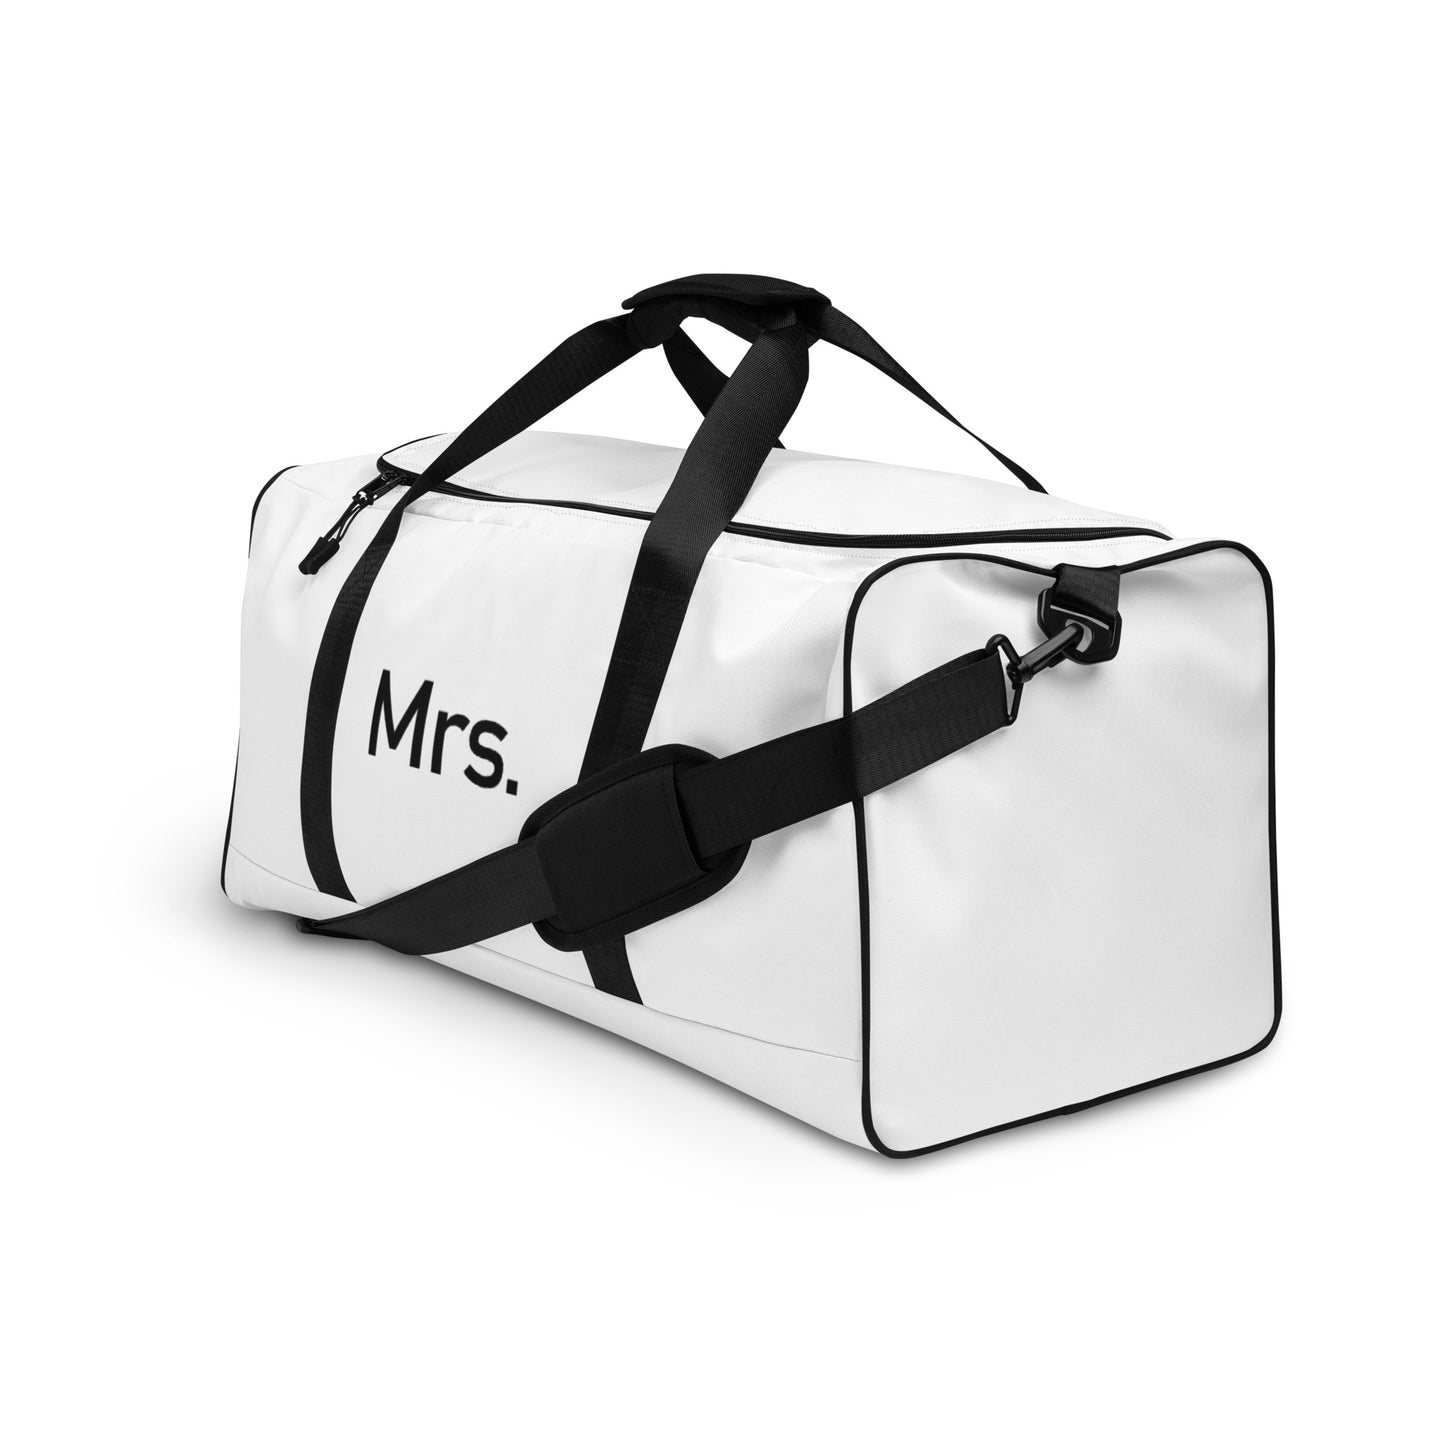 Mrs. - Sustainably Made Duffle Bag